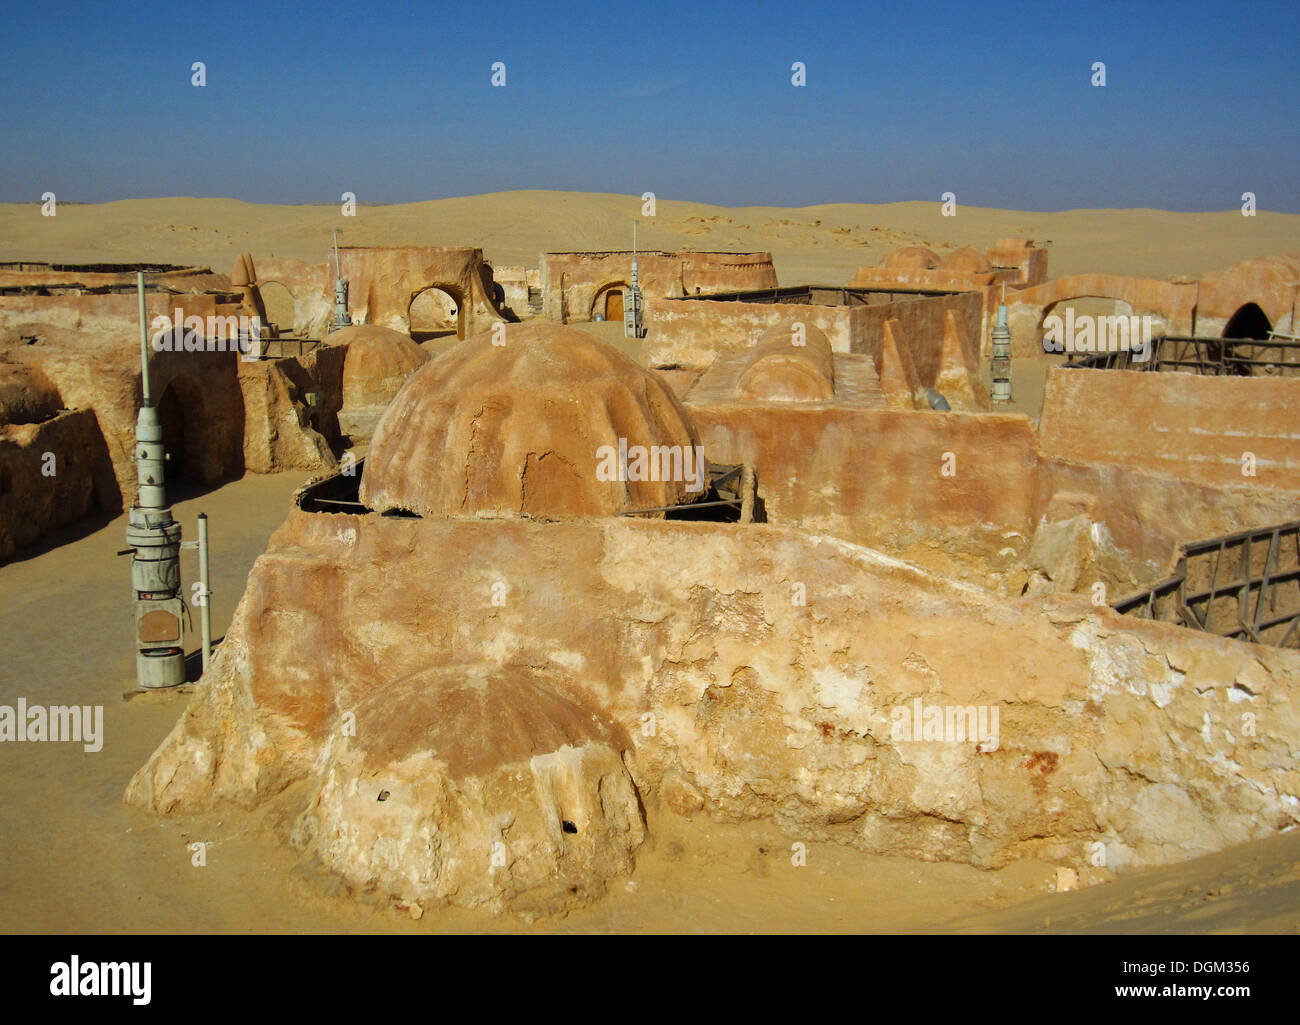 The set for 'Star Wars' in the desert in Nefta, Tunisia, on 4 October 2013. Stock Photo